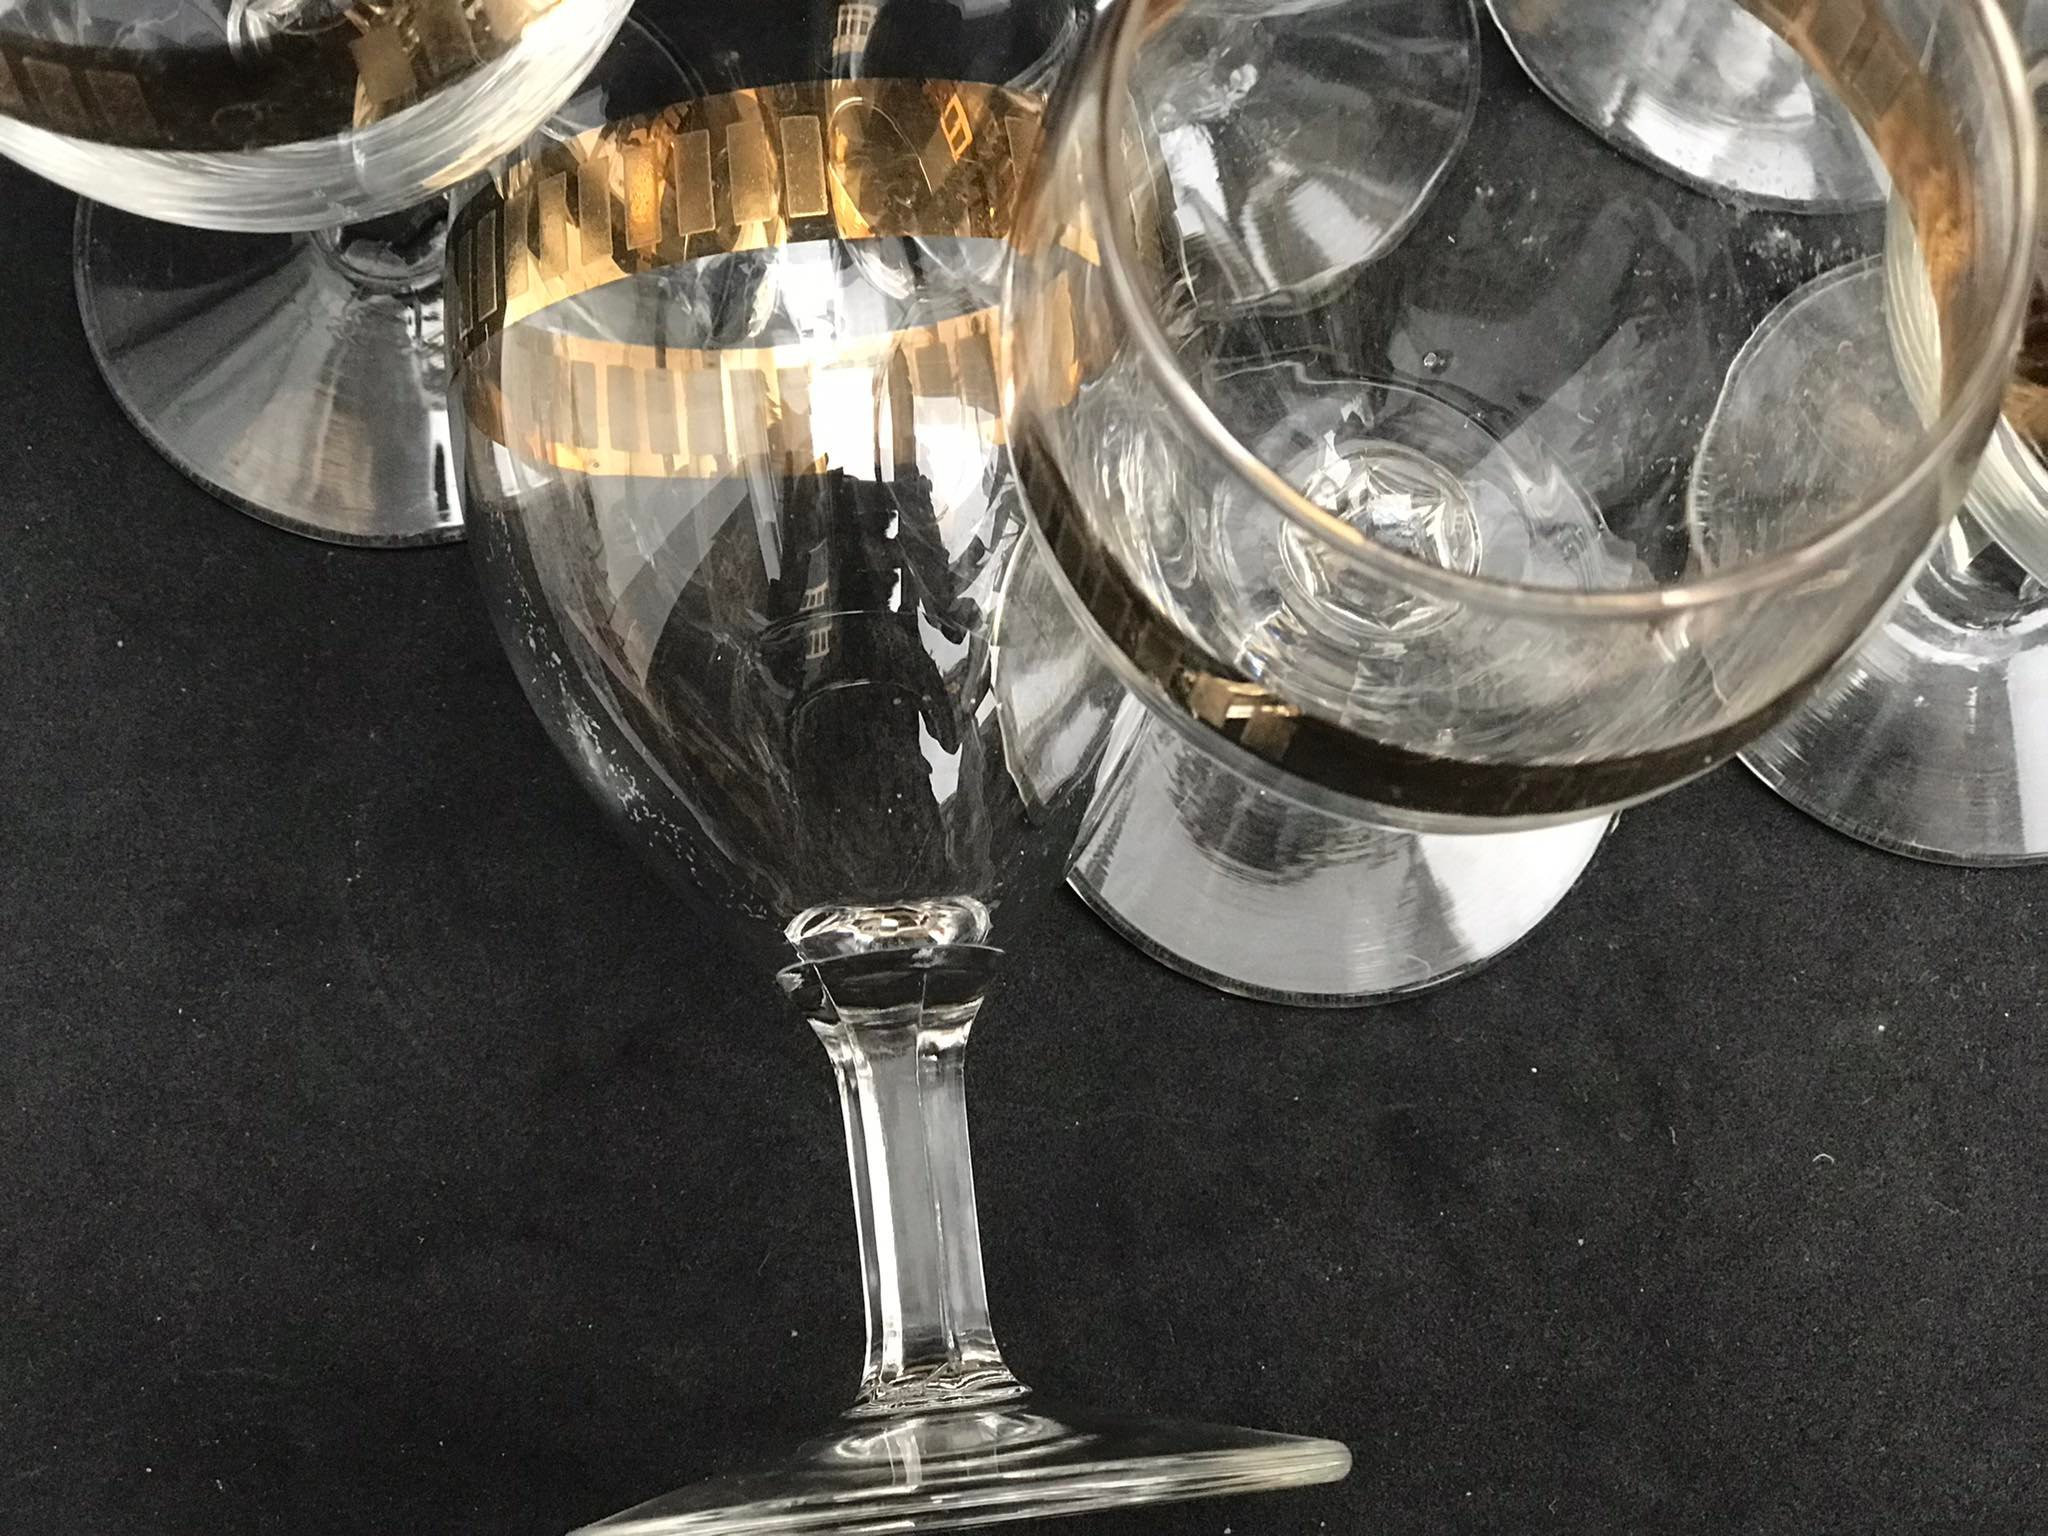 Golden Fantasy Glasses: Luxury Glassware Collection for Stylish Entertaining